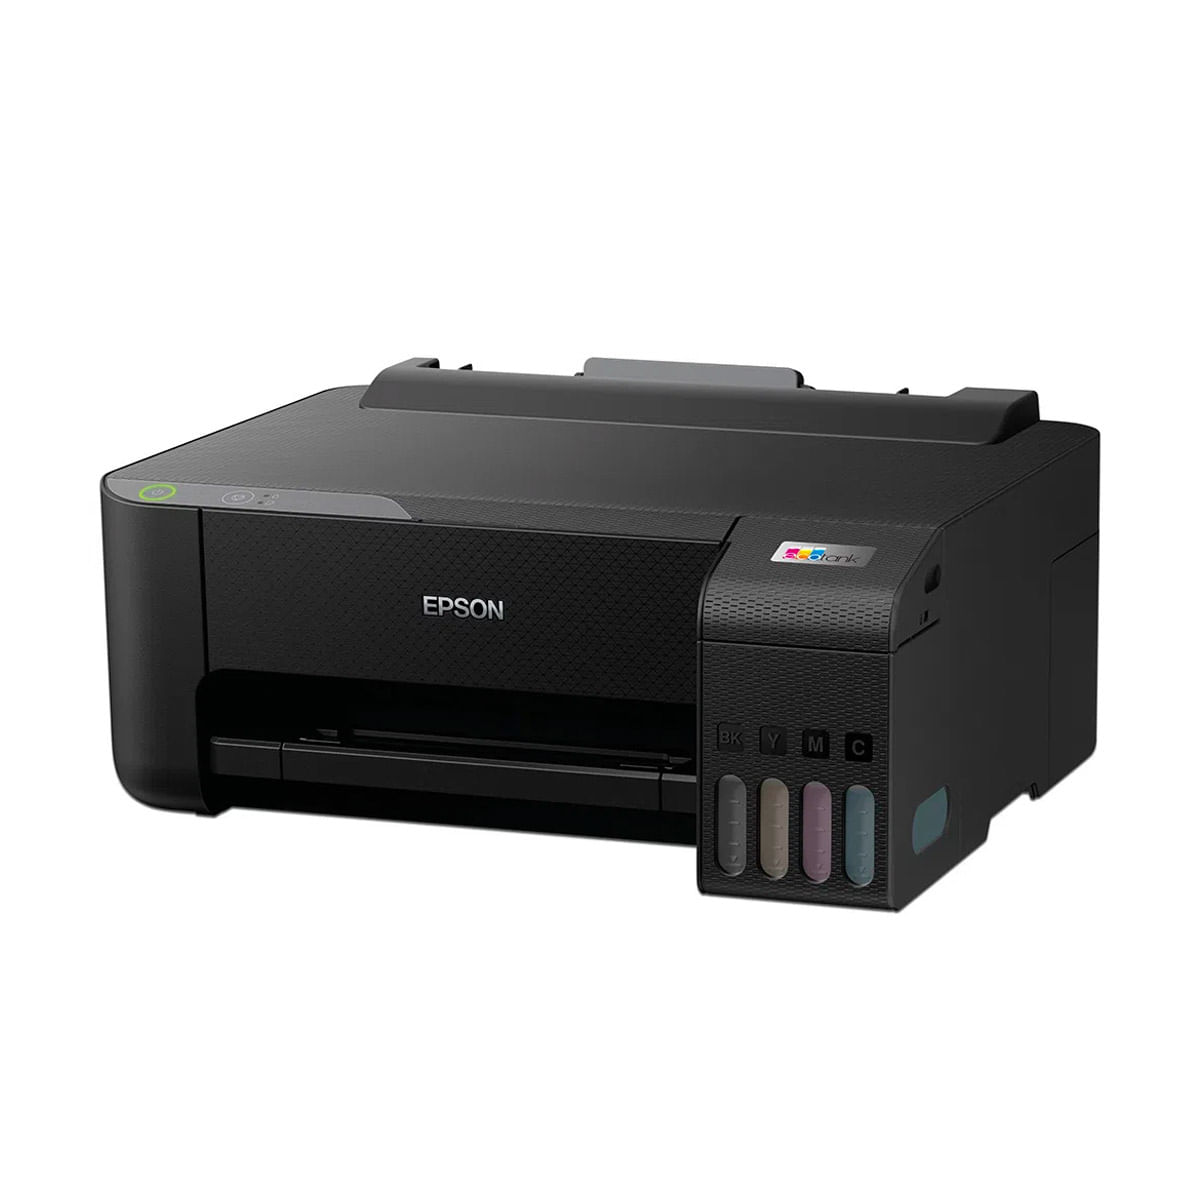 Epson L1210 Impresora Ecotank Color Inyeccion Tinta Bigdoto 5460